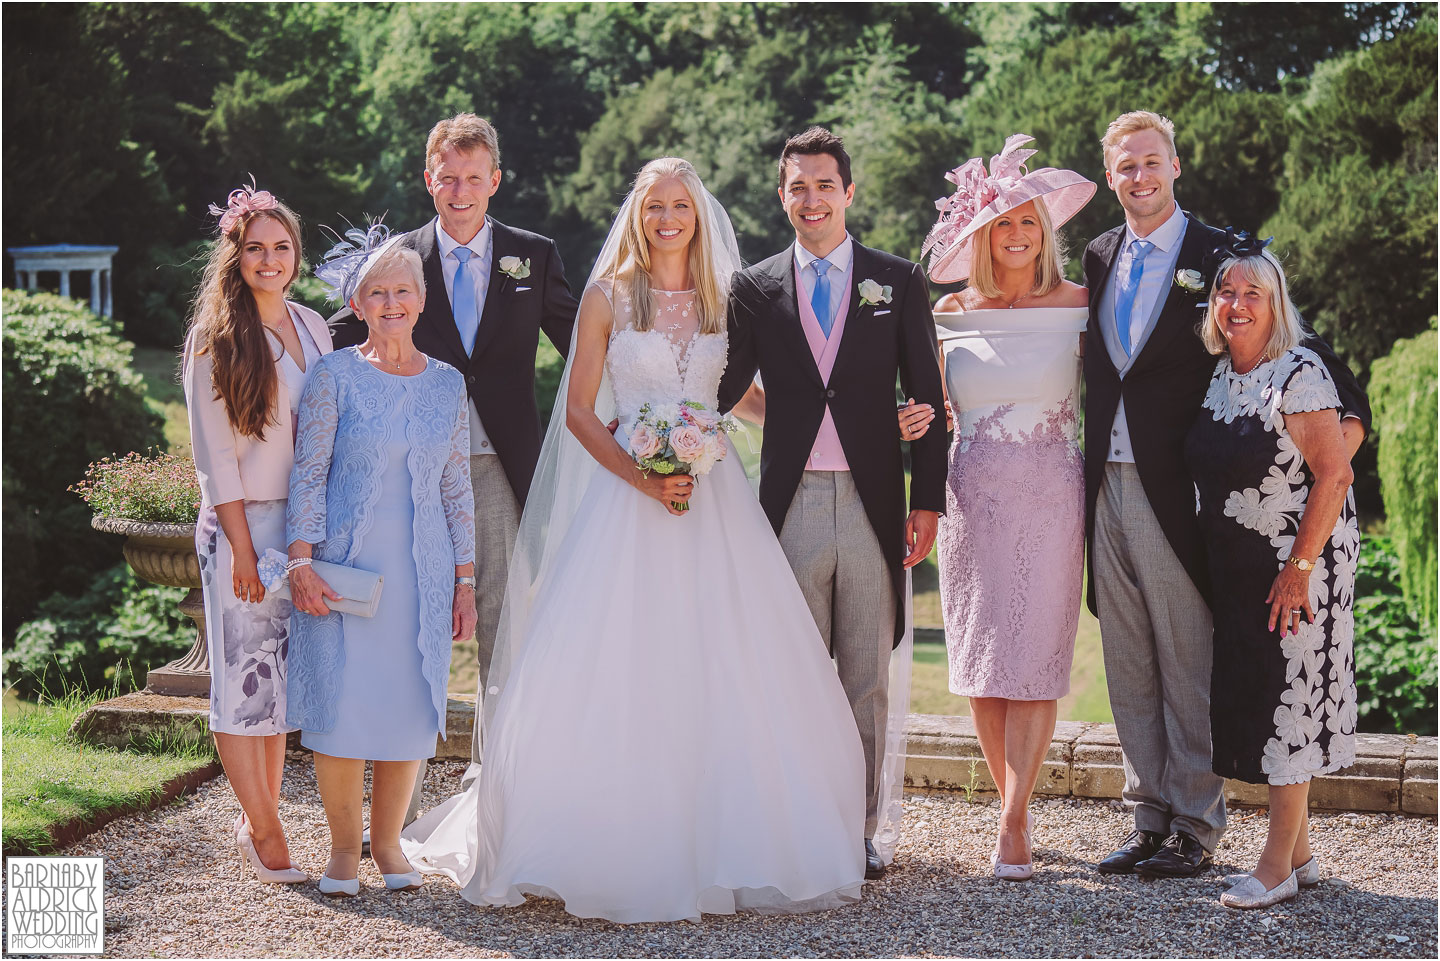 Birdsall House Wedding Group Photo